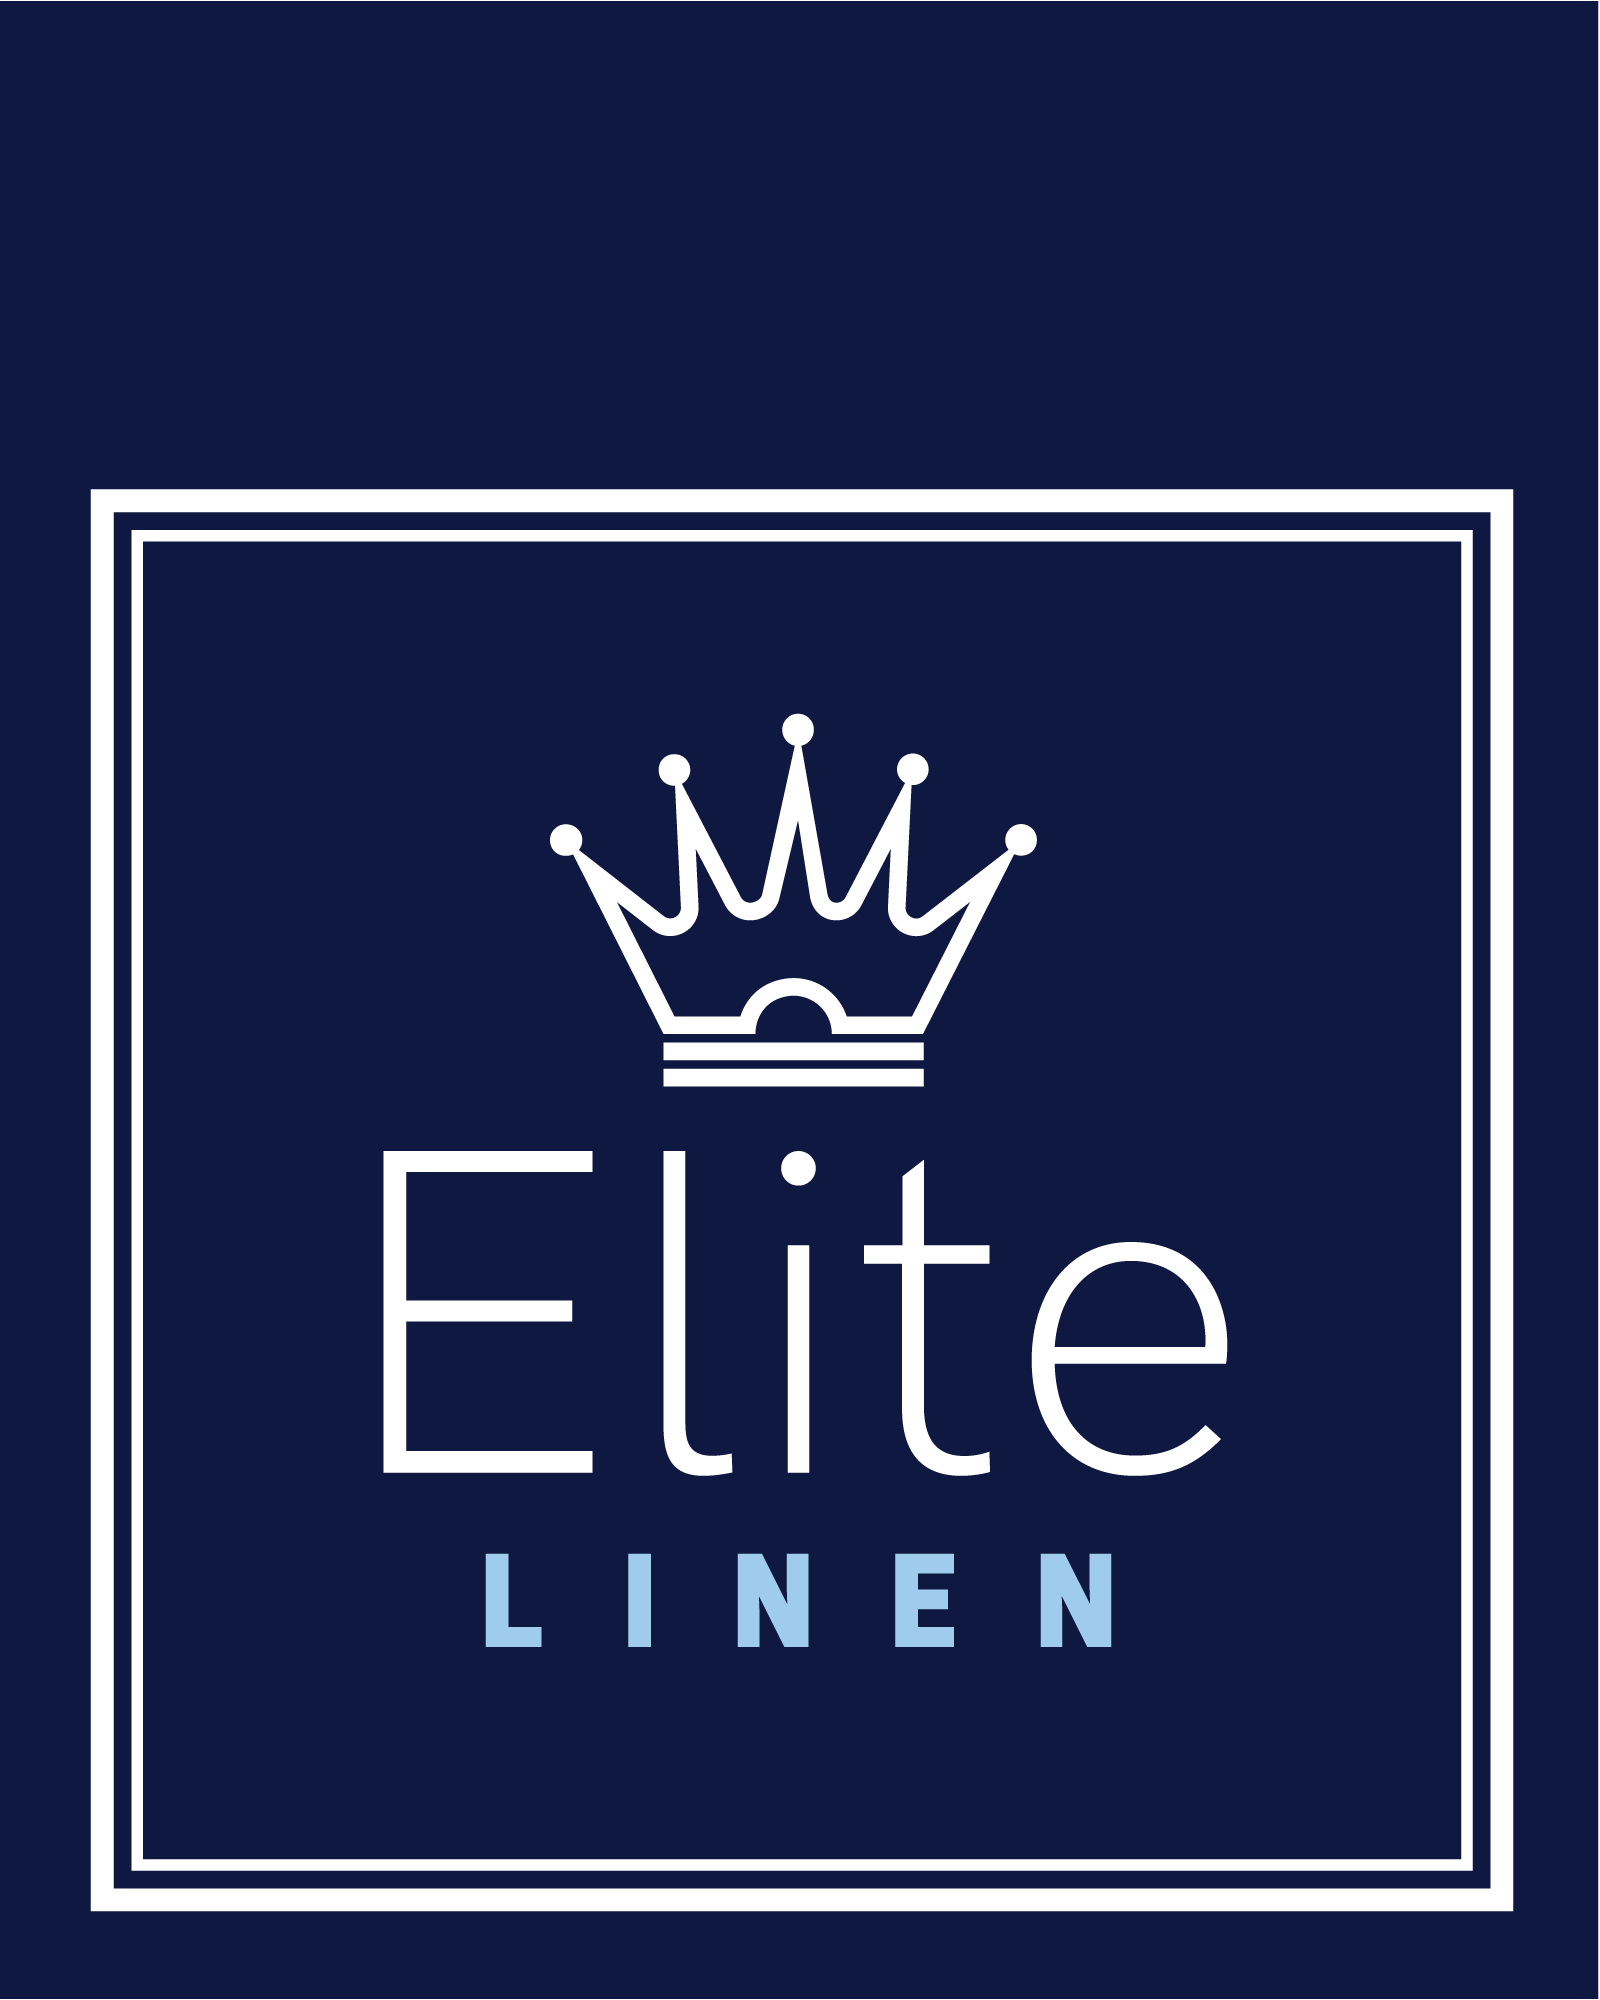 Elite Linen